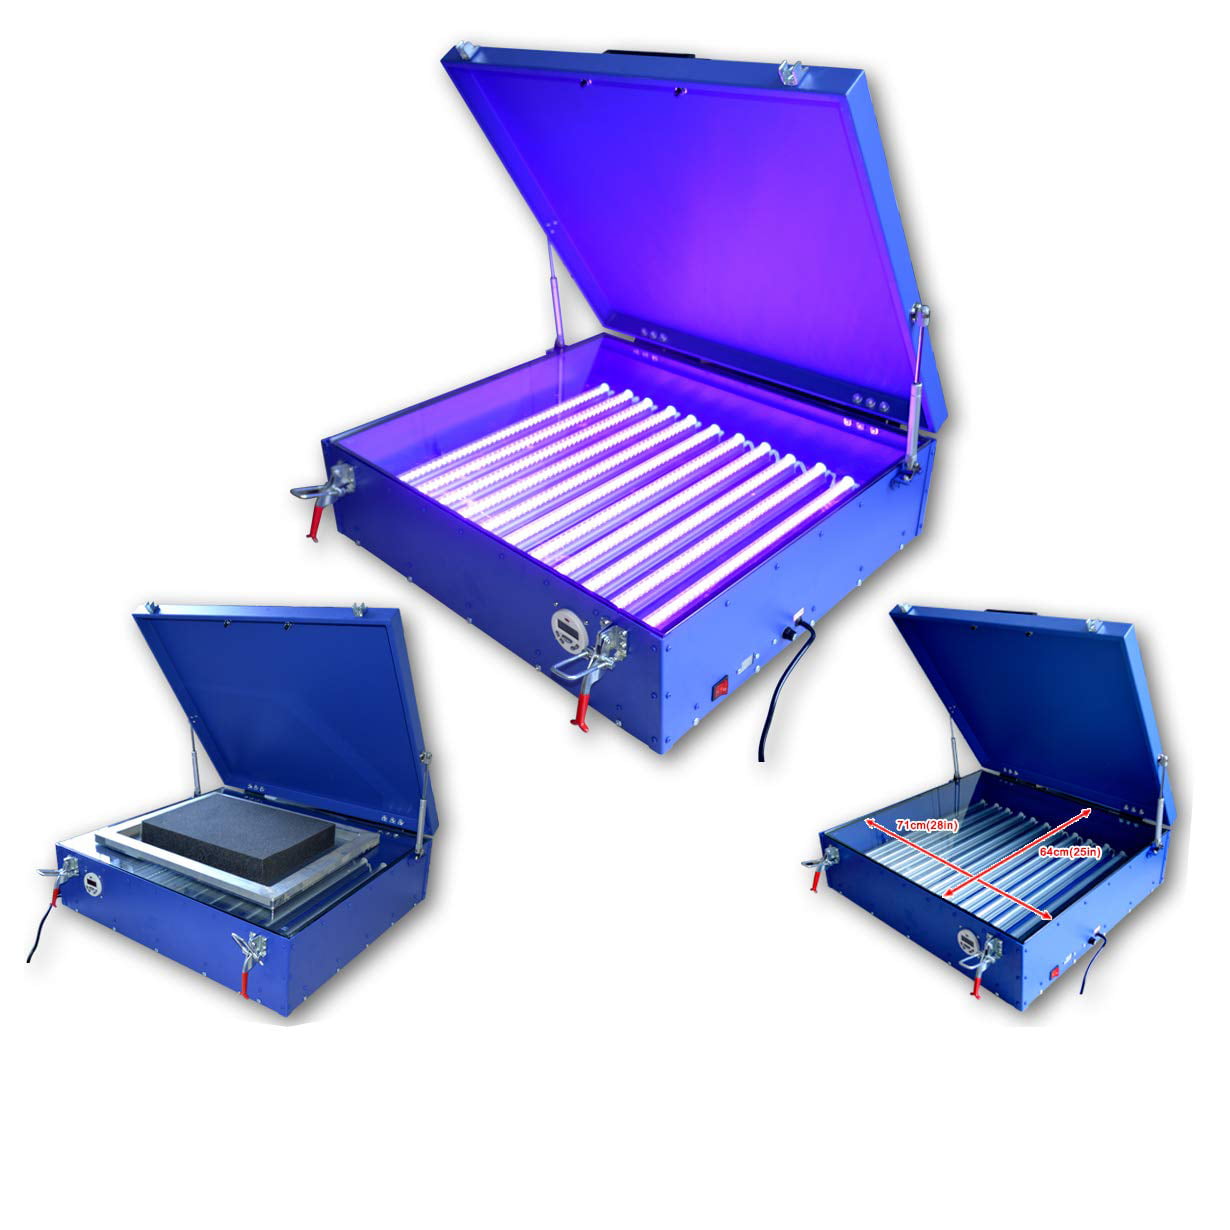 Lab Og presse INTBUYING UV Exposure Unit Silk Screen Printing LED Light Box 24x28 Inches  110V - Walmart.com